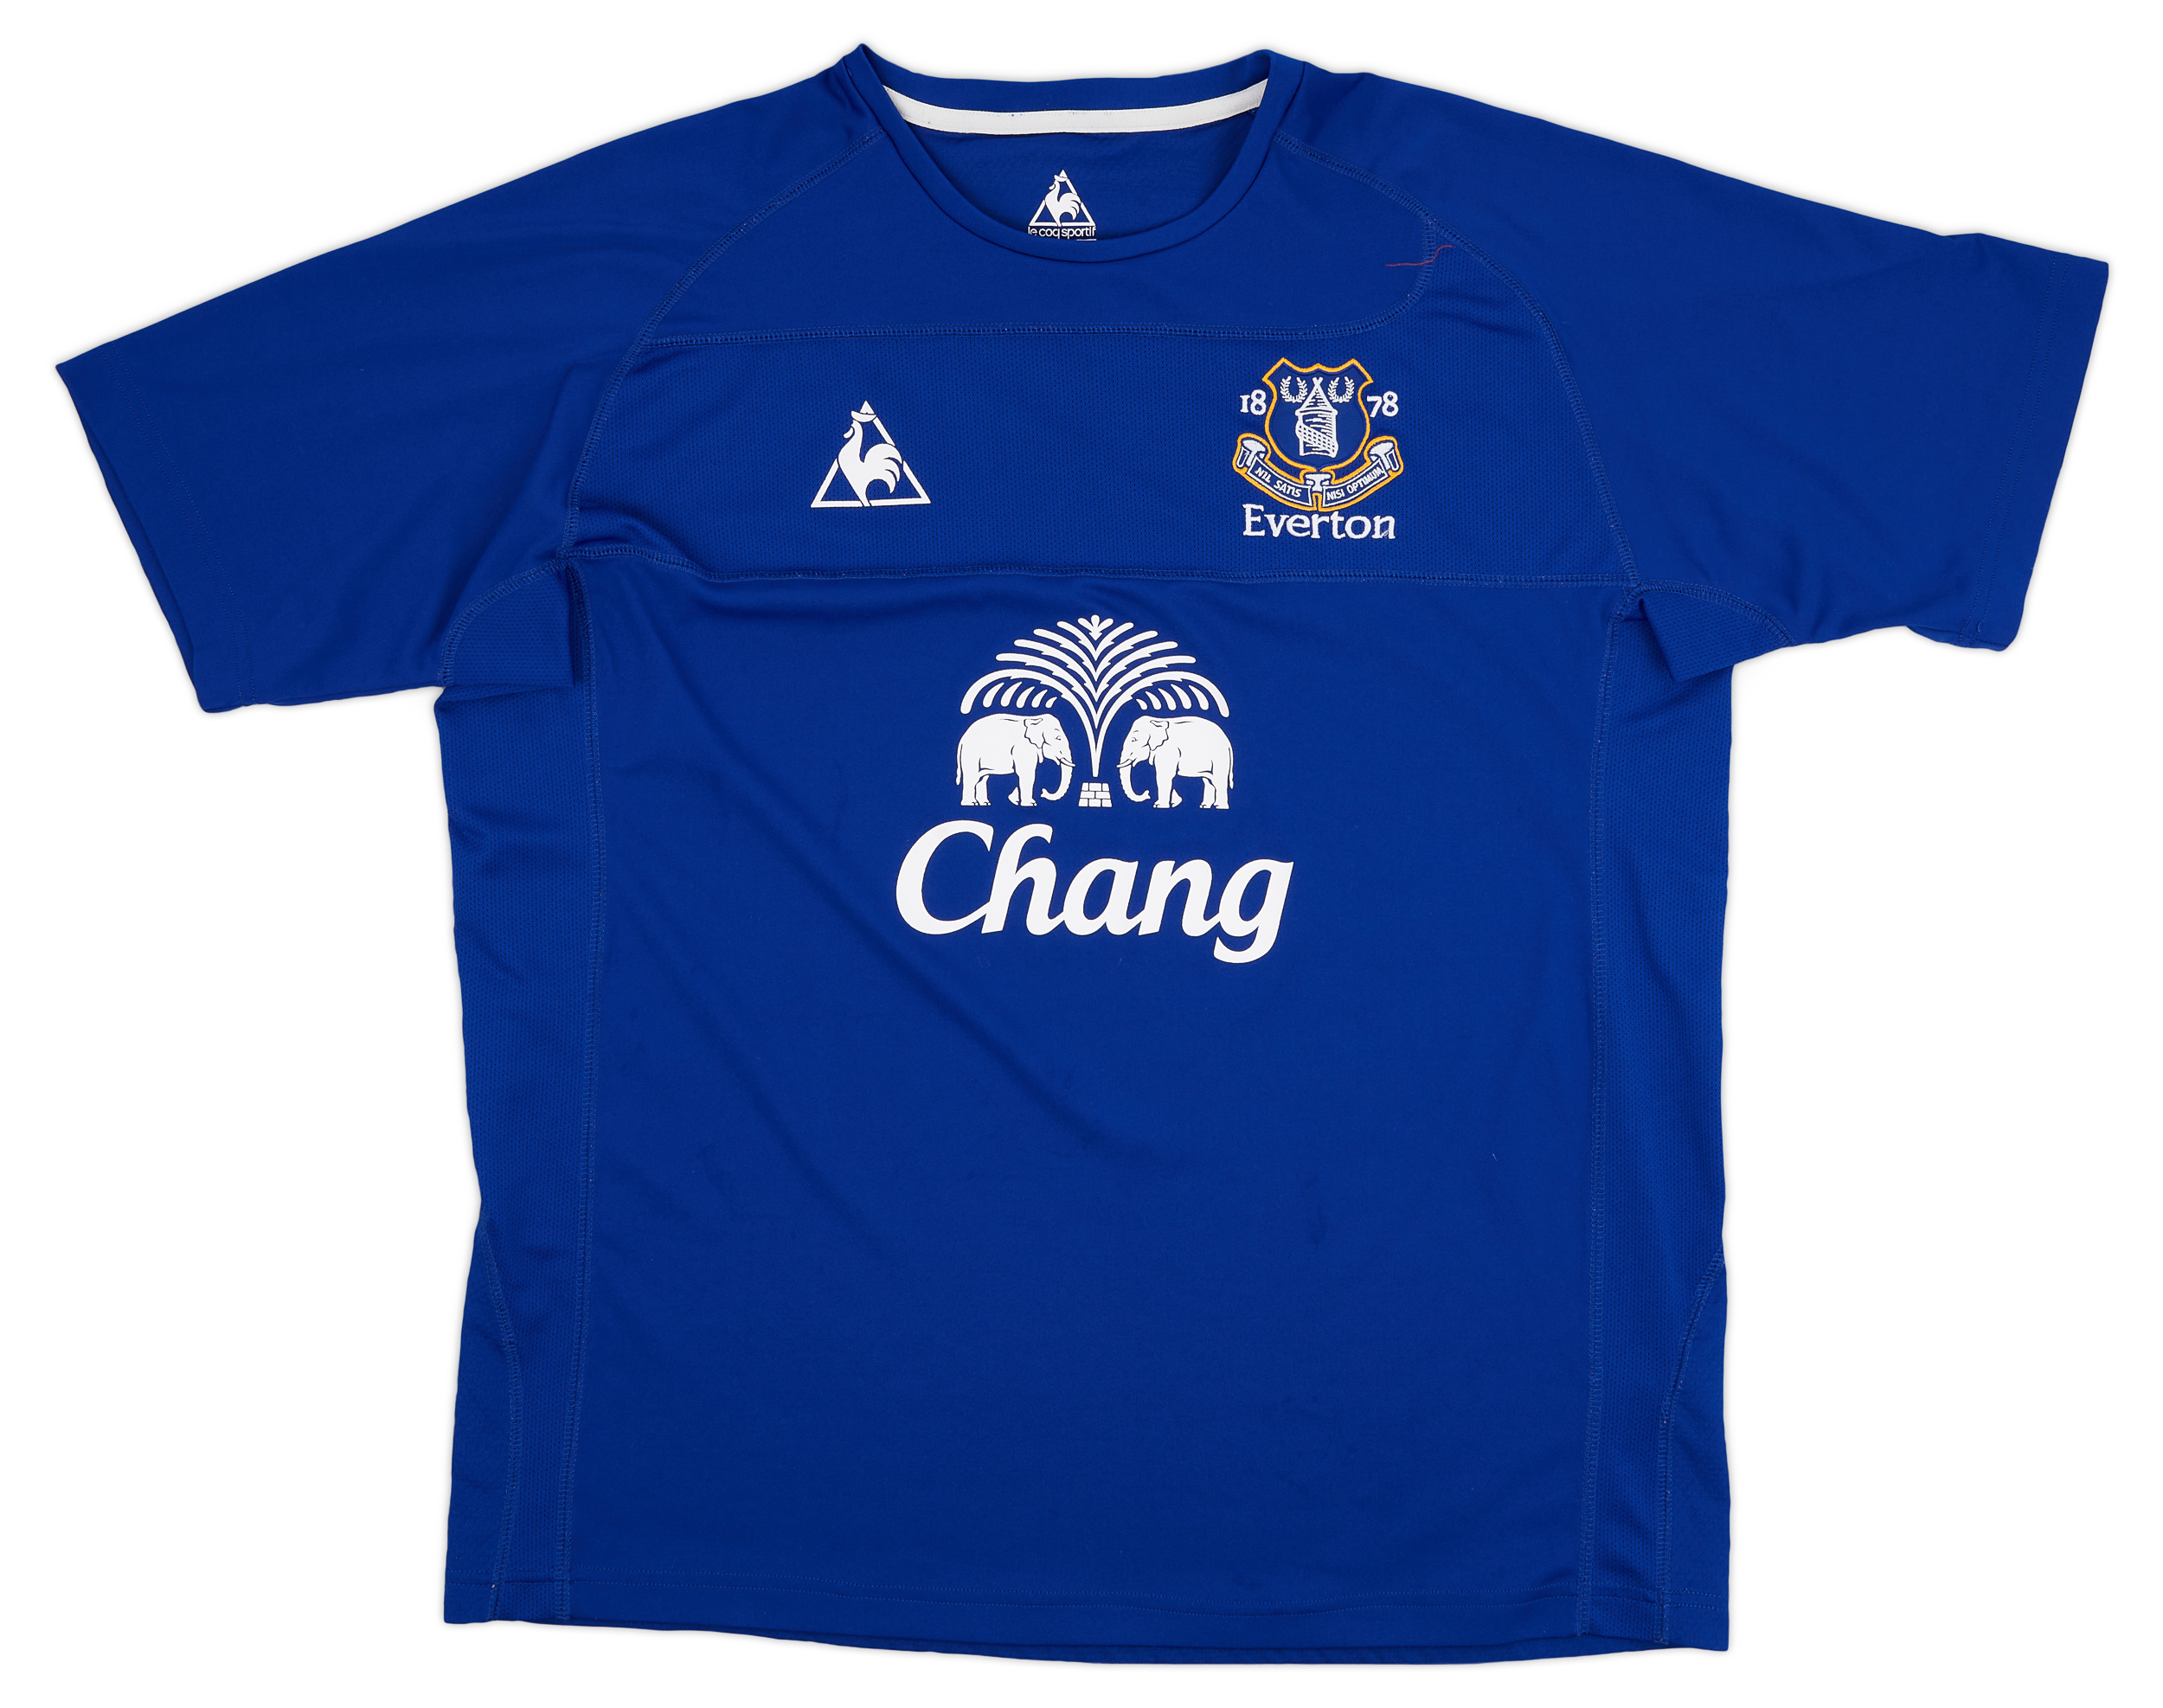 2010-11 Everton Home Shirt - 8/10 - ()